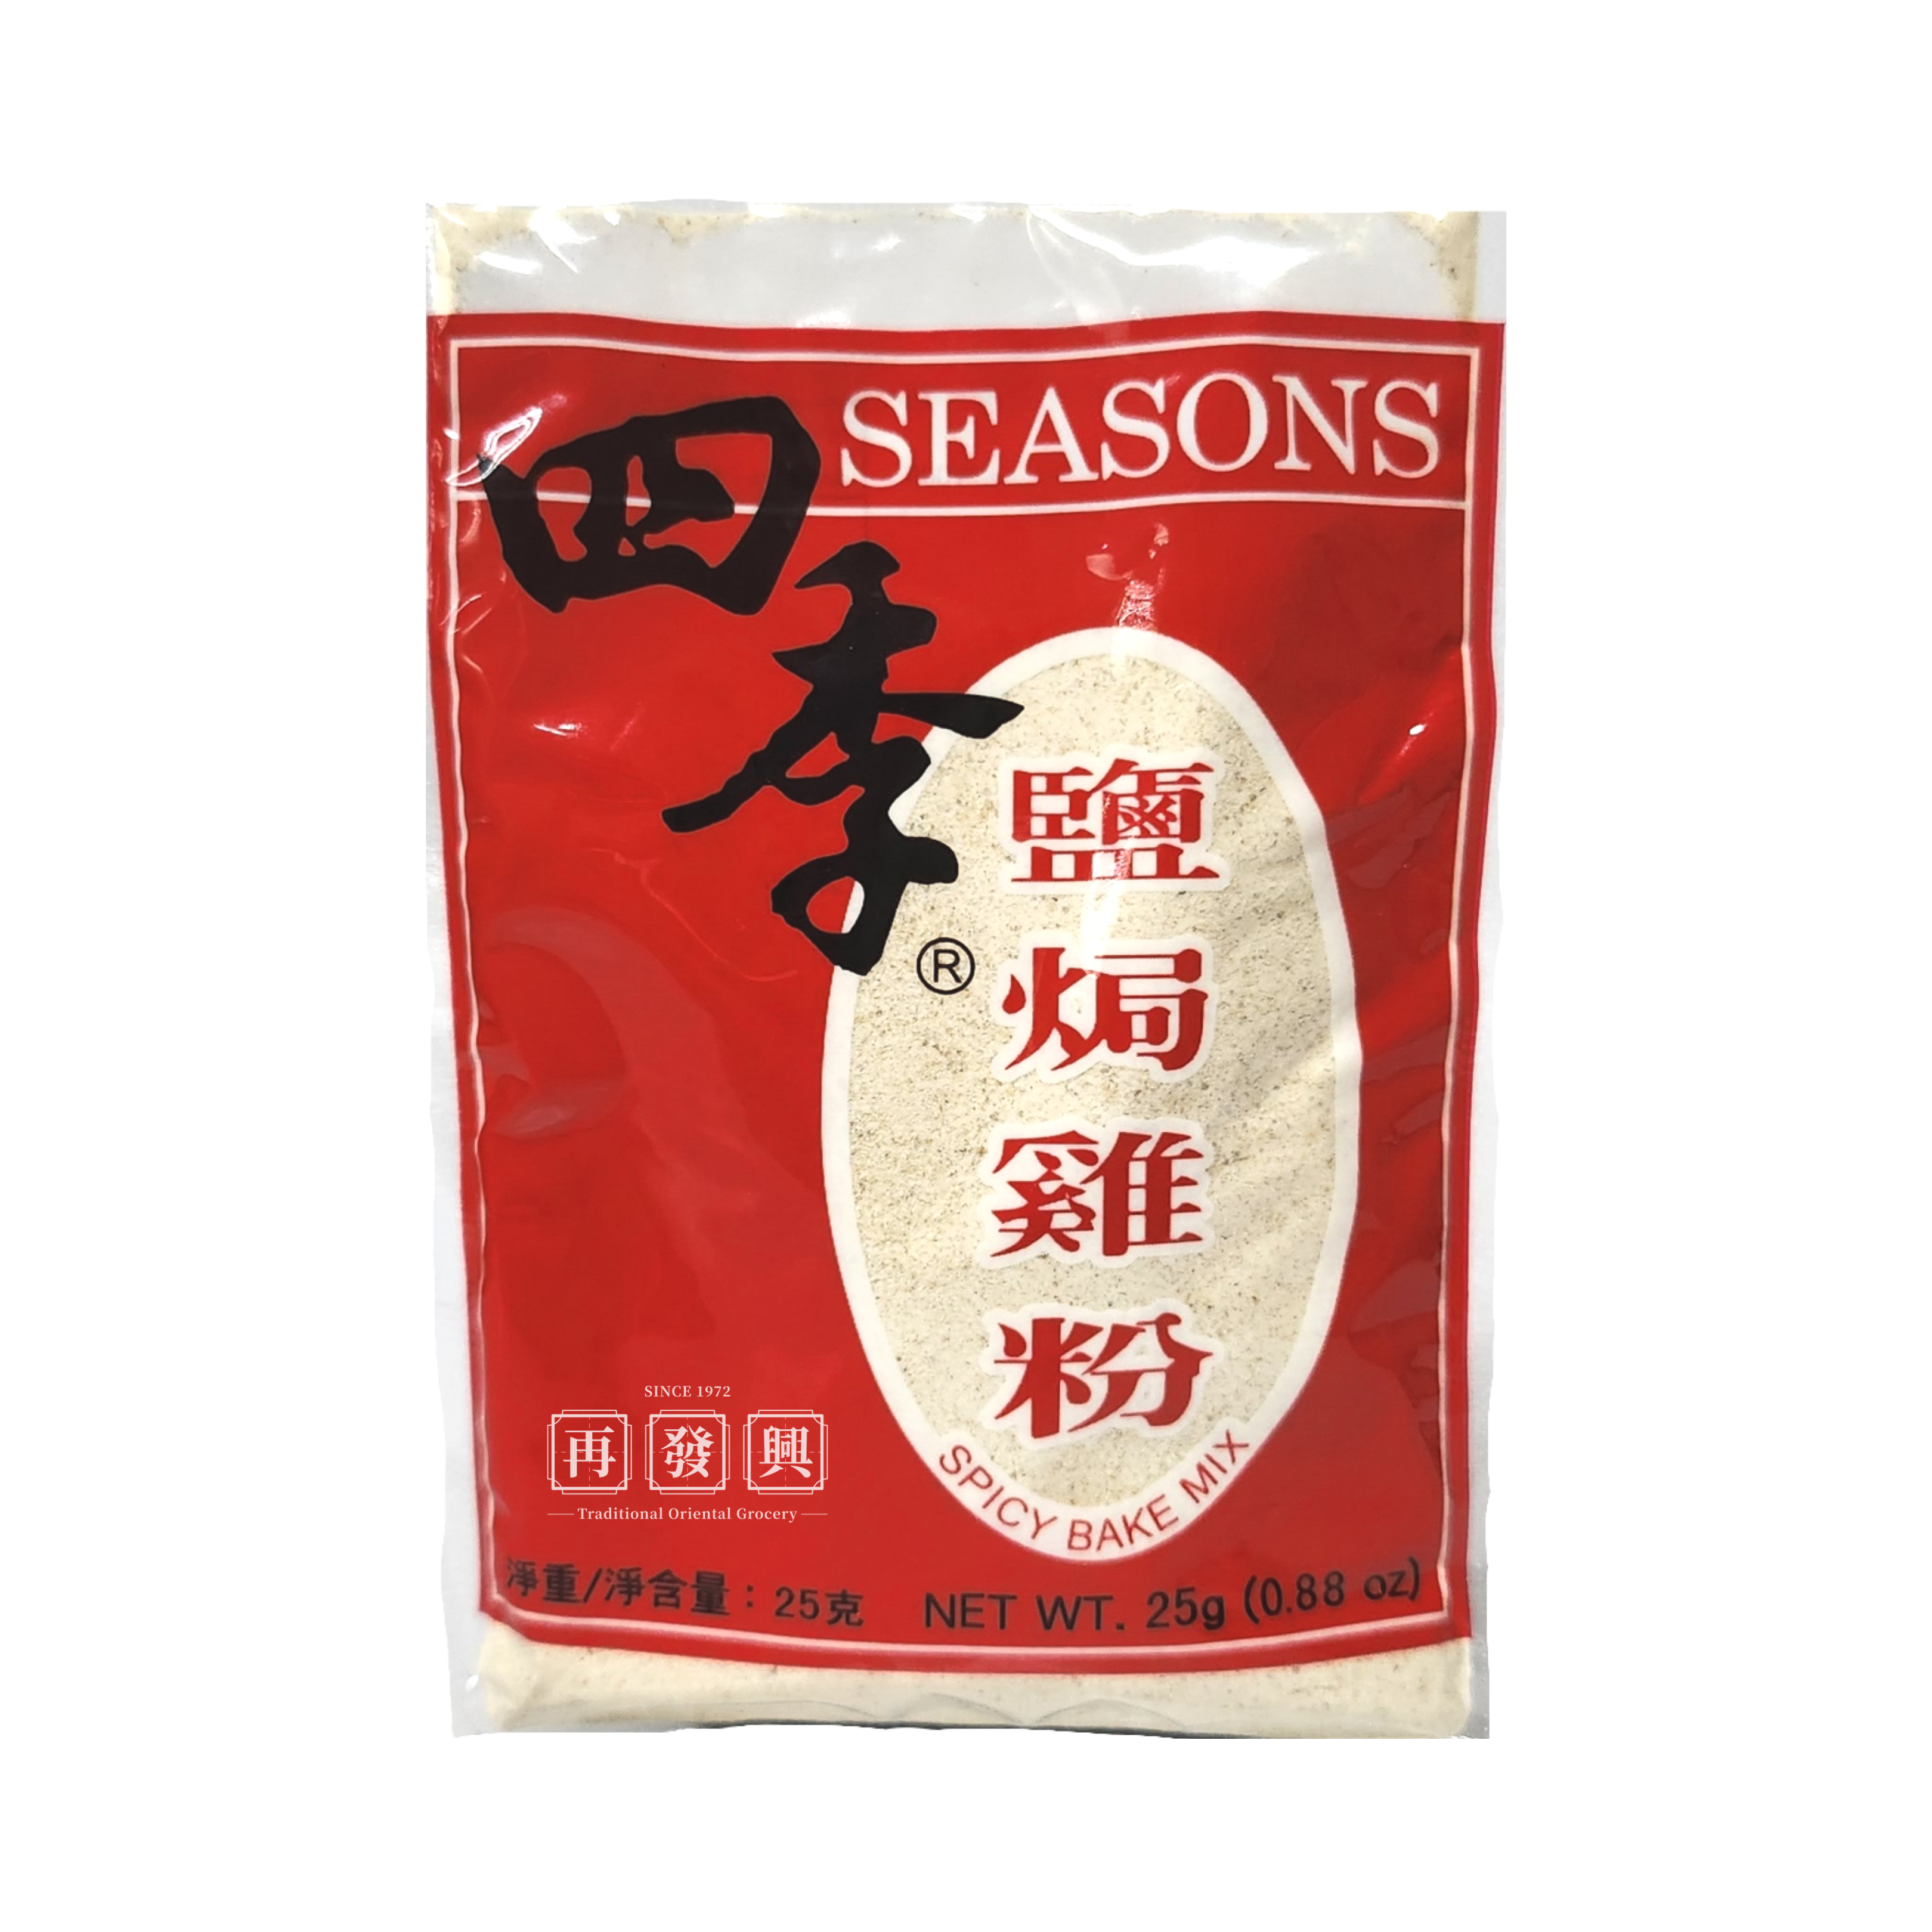 HK Imported Seasons Spicy Bake Mix 香港进口四季盐焗鸡粉 25g